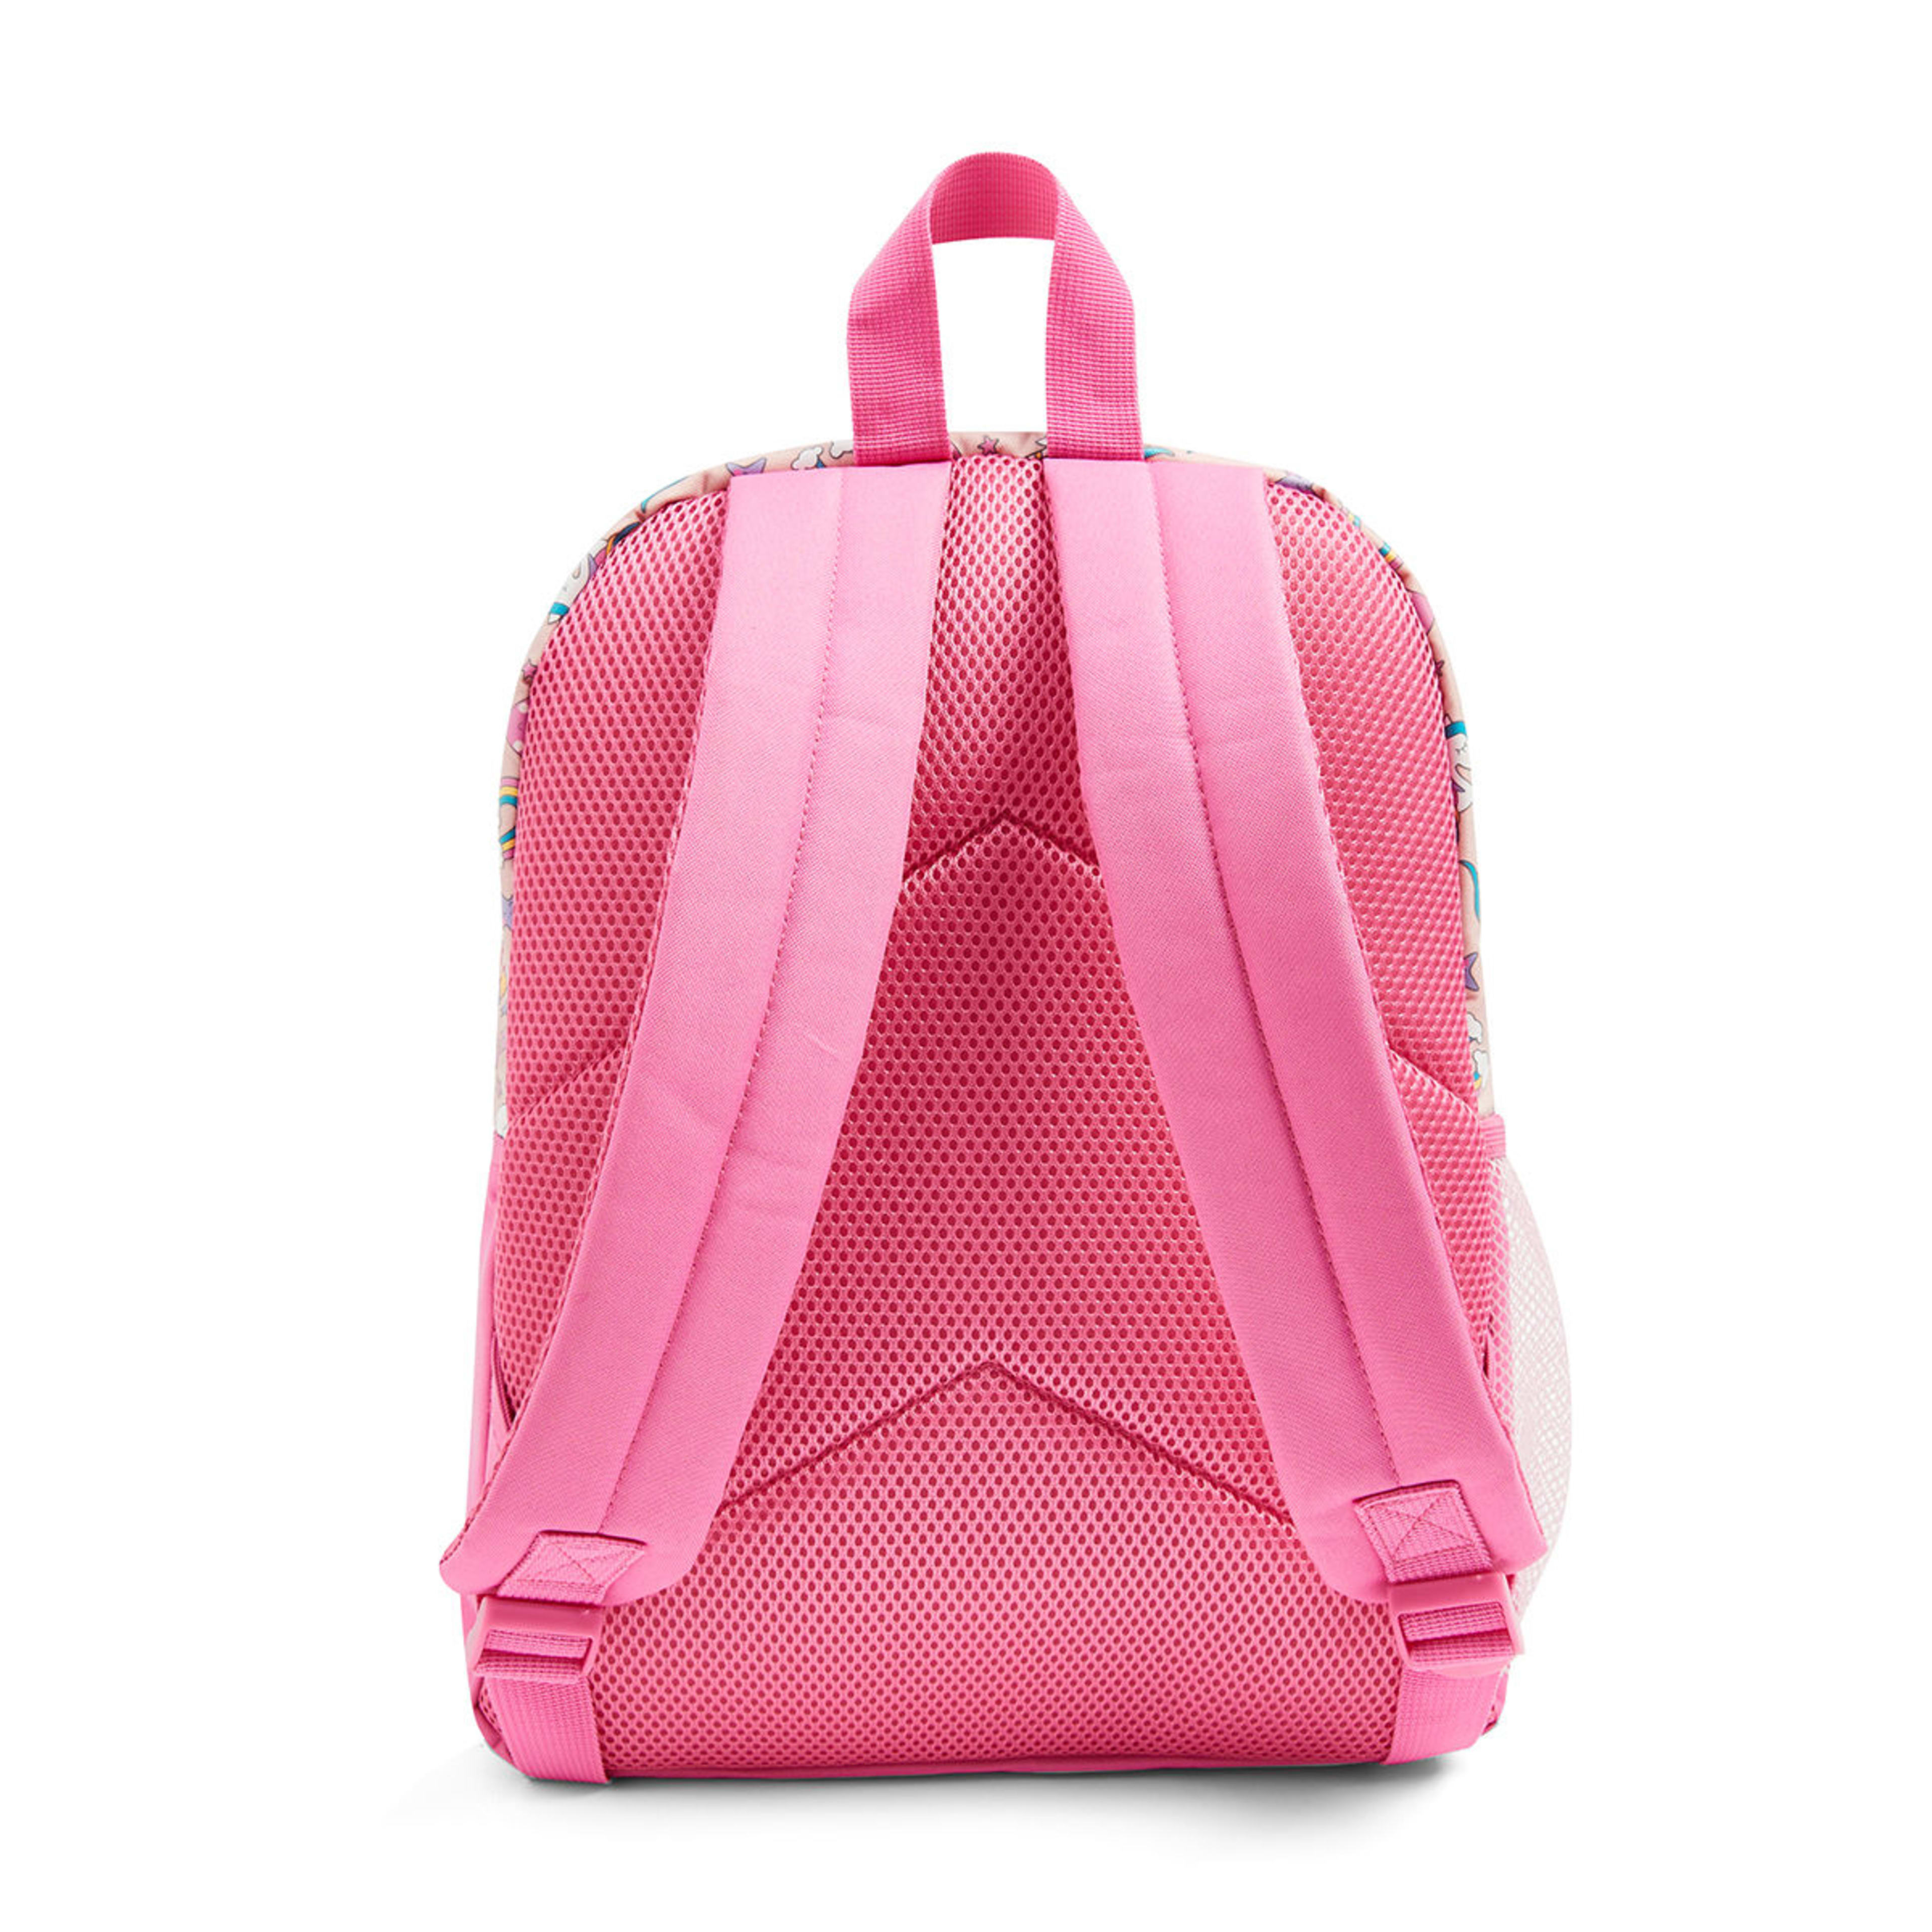 Kids Junior Unicorn Backpack - Pink - Kmart